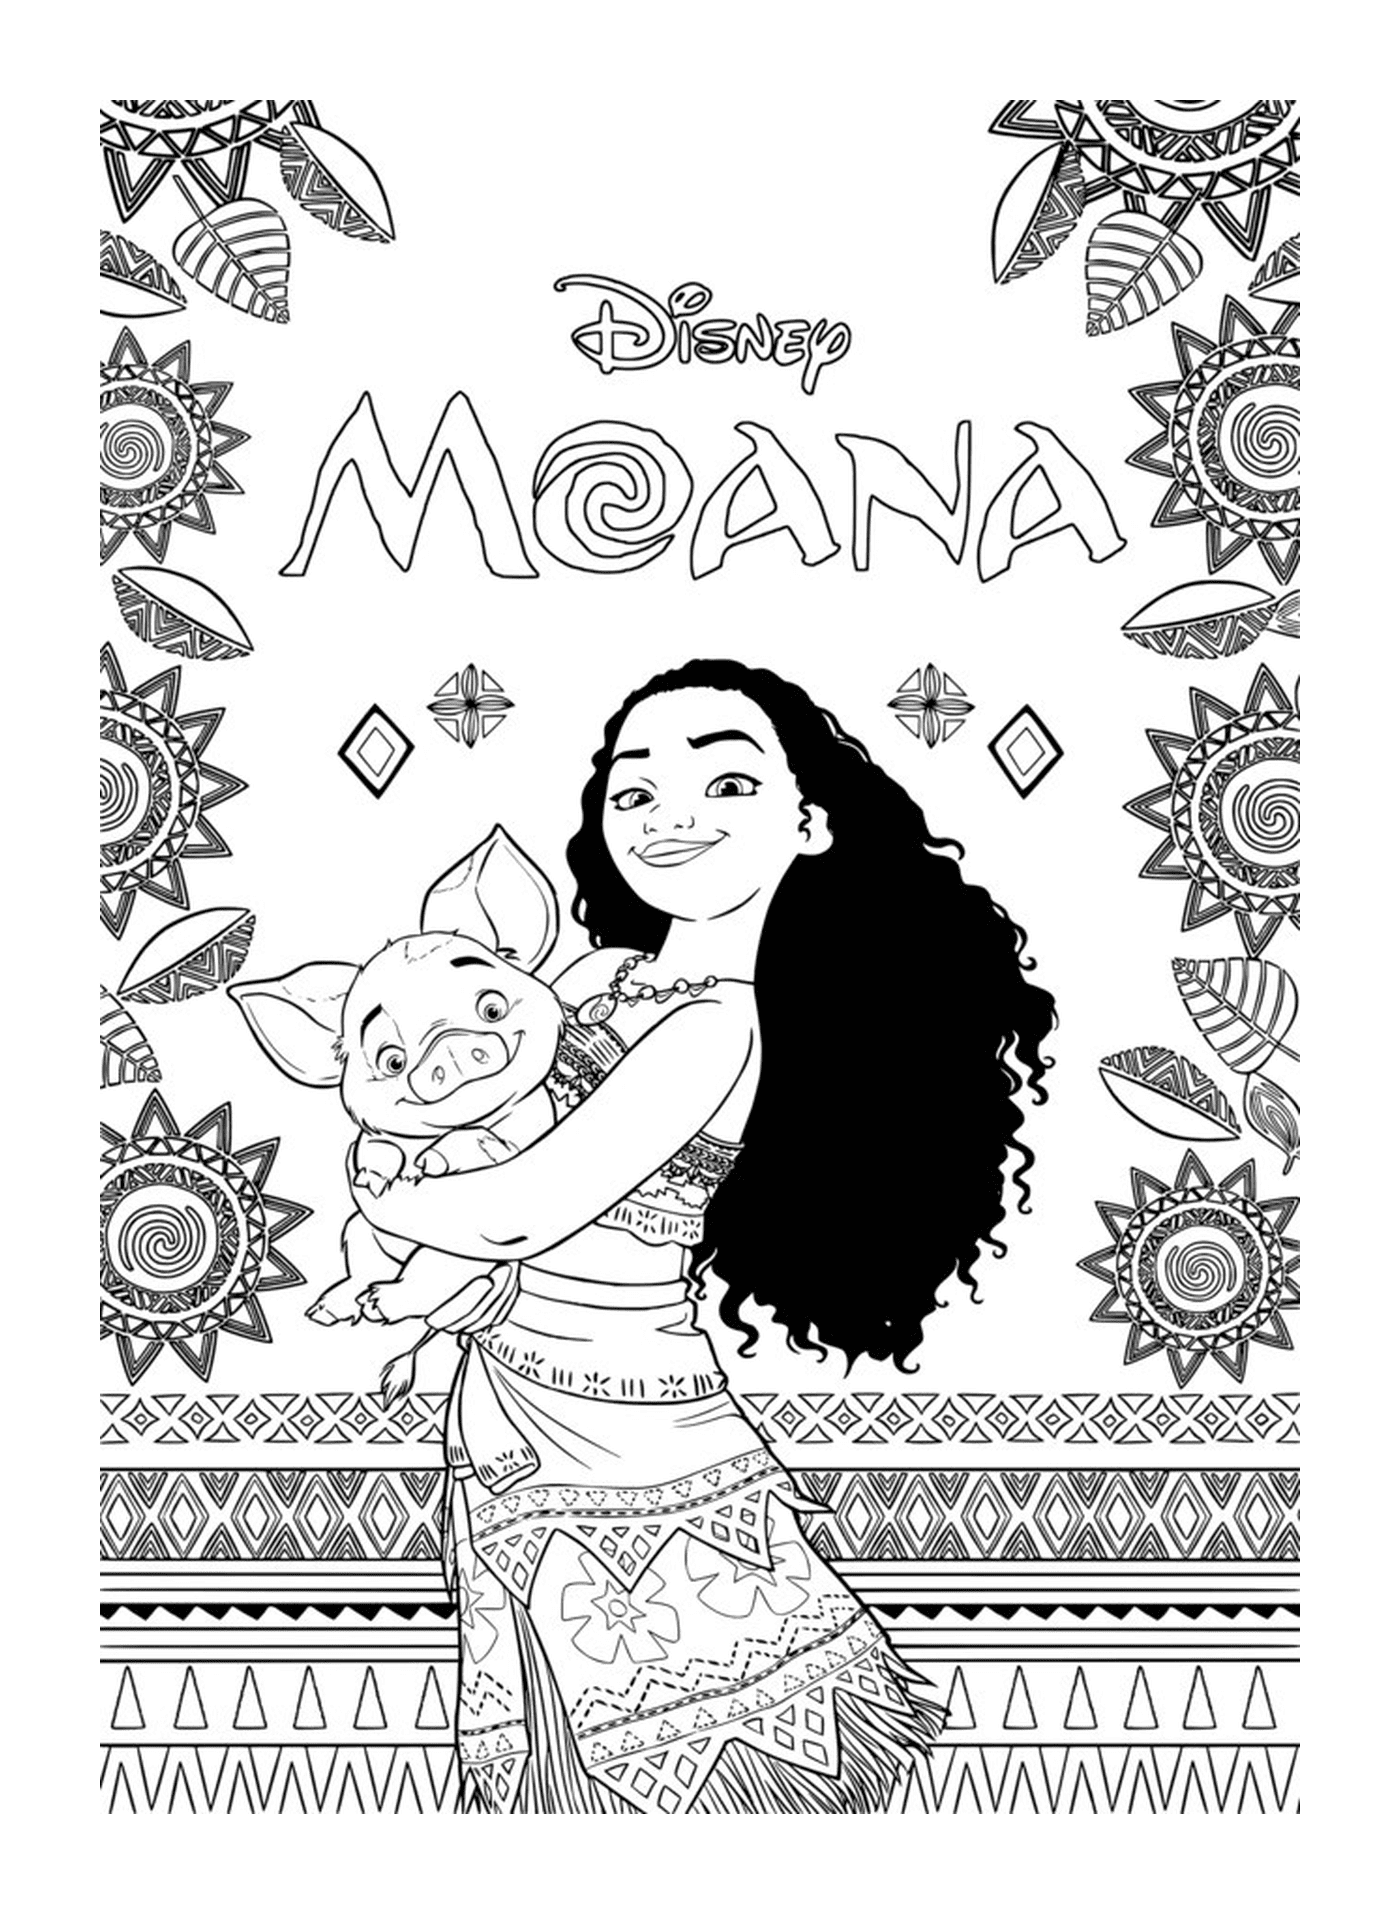   Moana, femme et son porcelet 